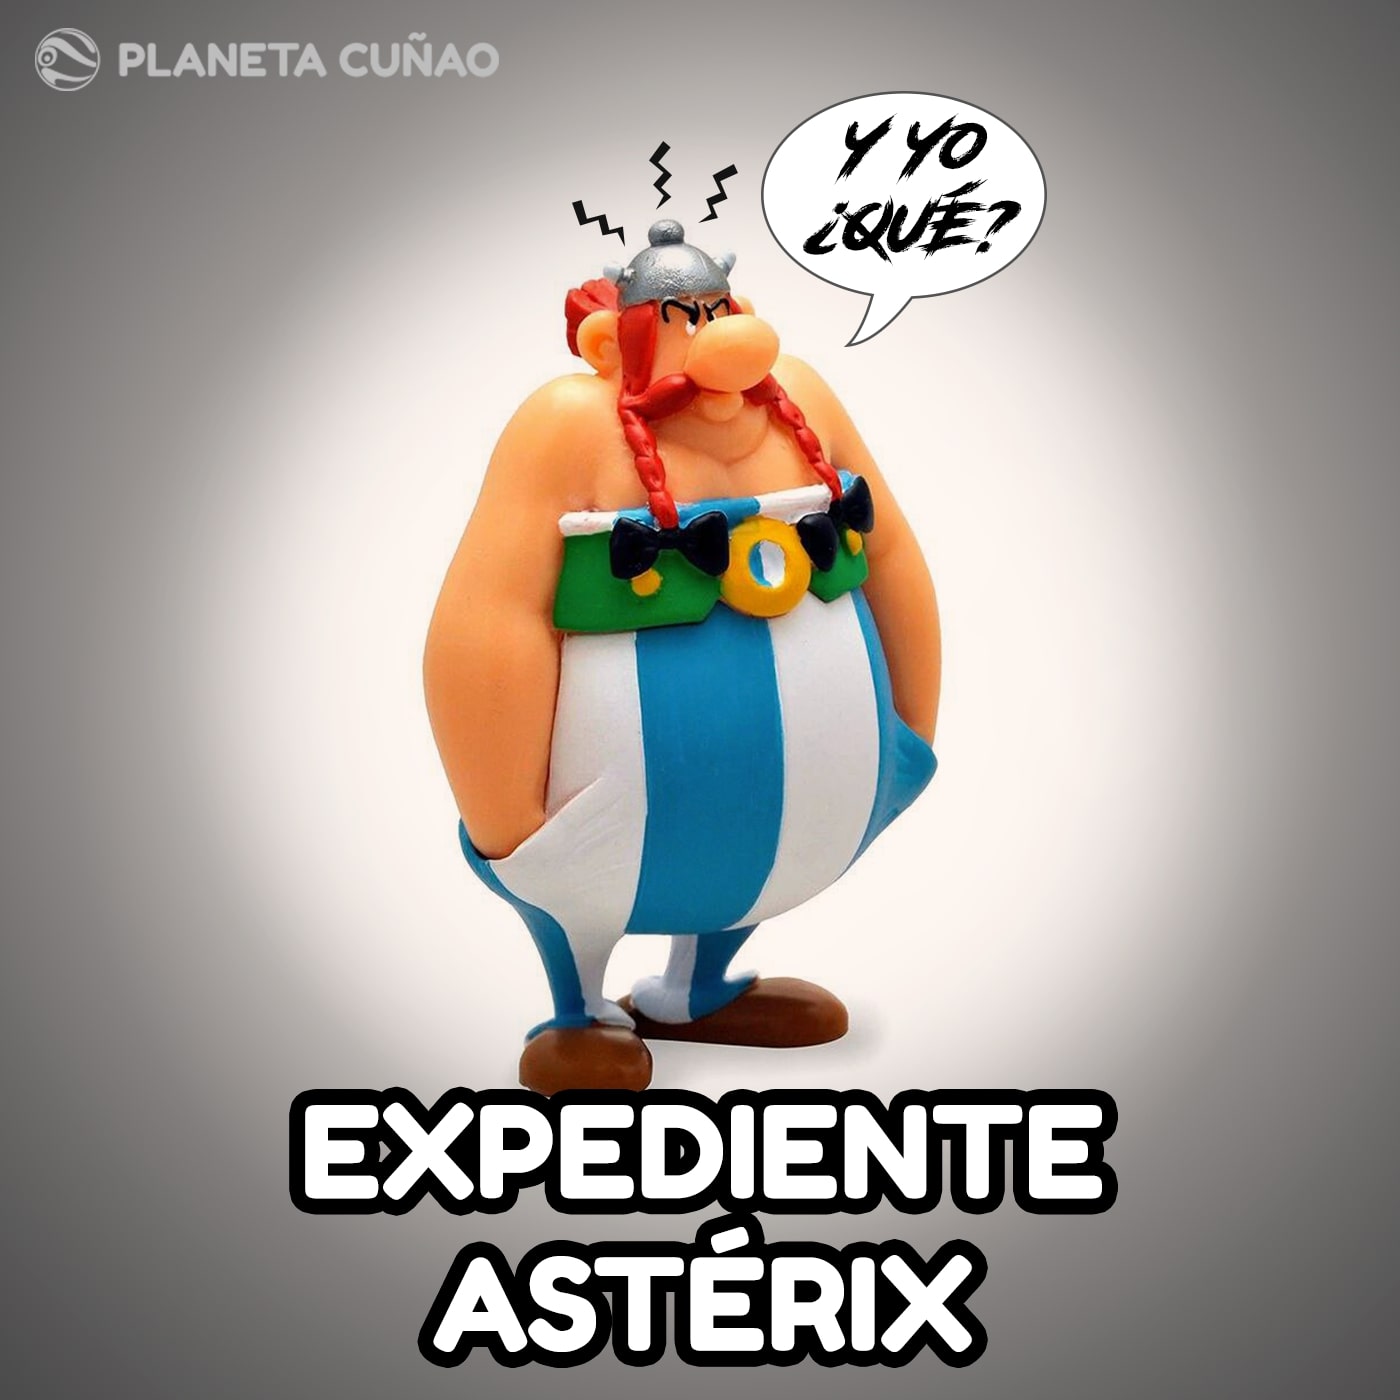 Expendiente Astérix